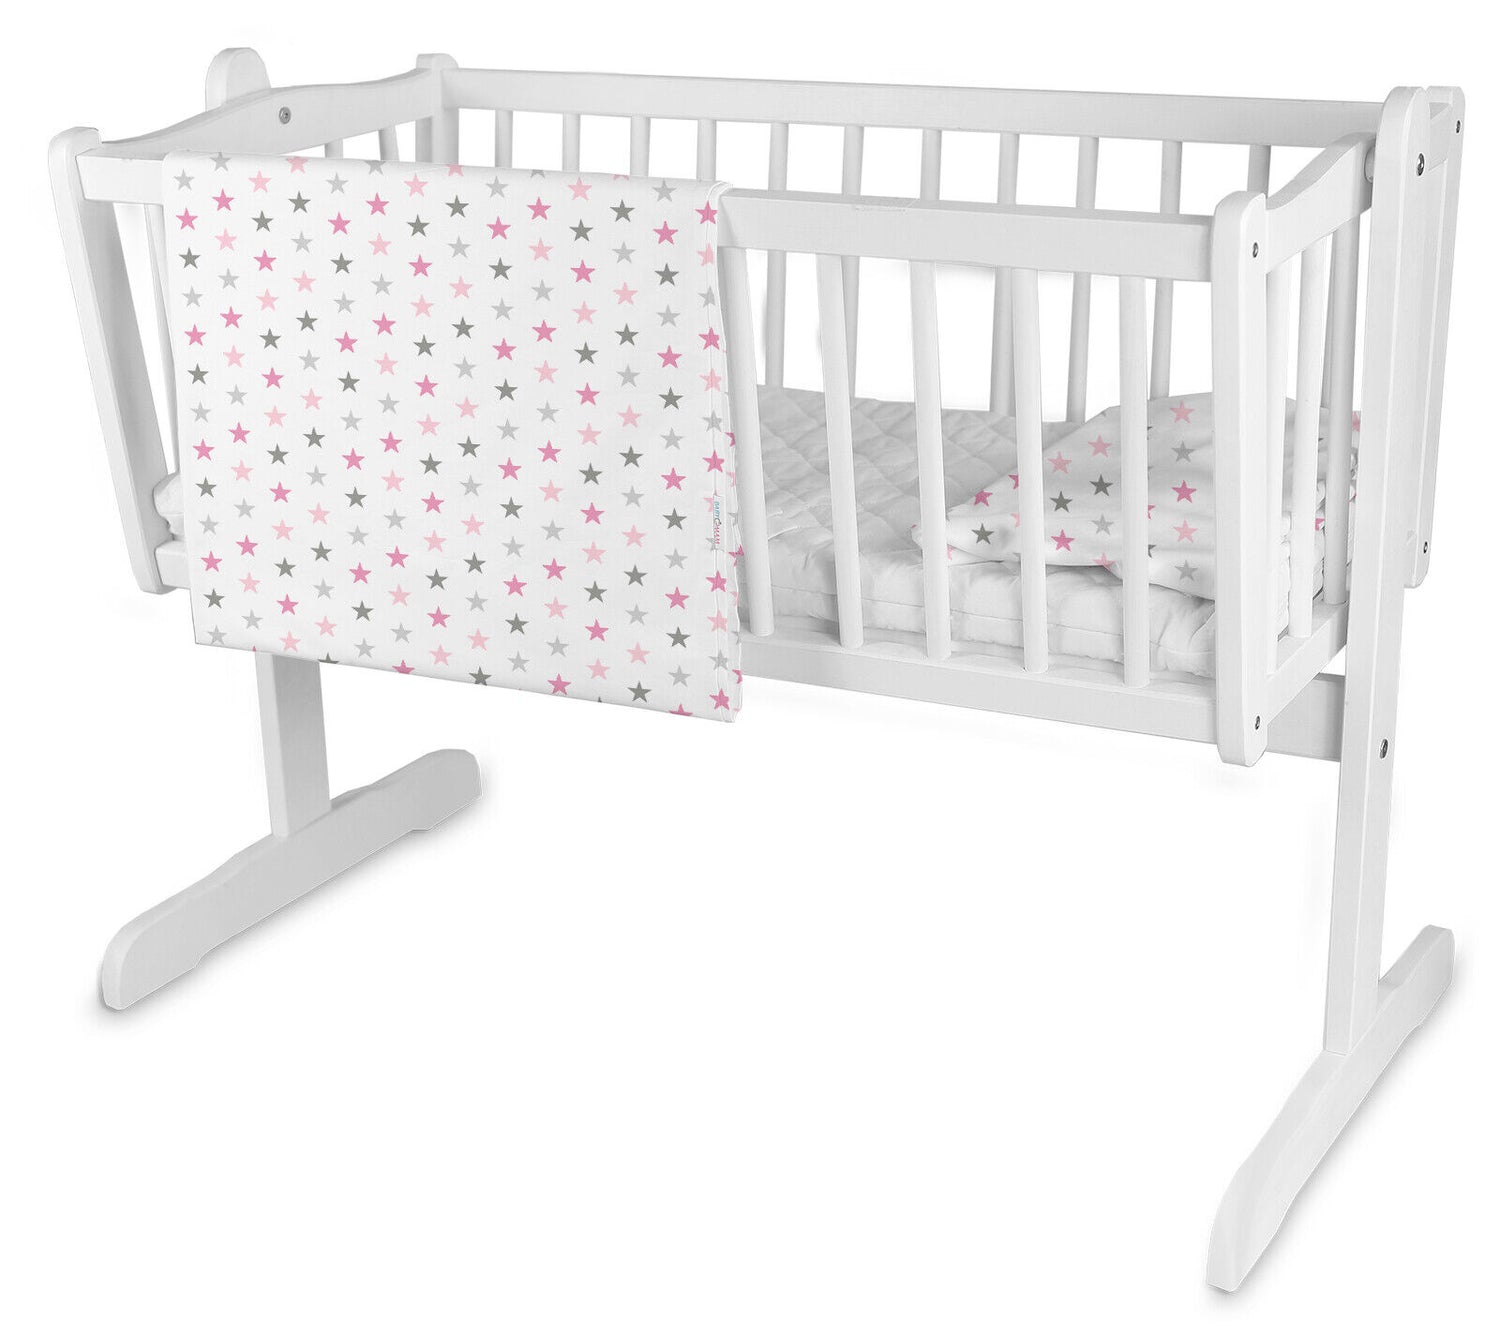 Baby bedding set 5pc nursery cotton pillow duvet bumper 70x80cm Grey Pink stars